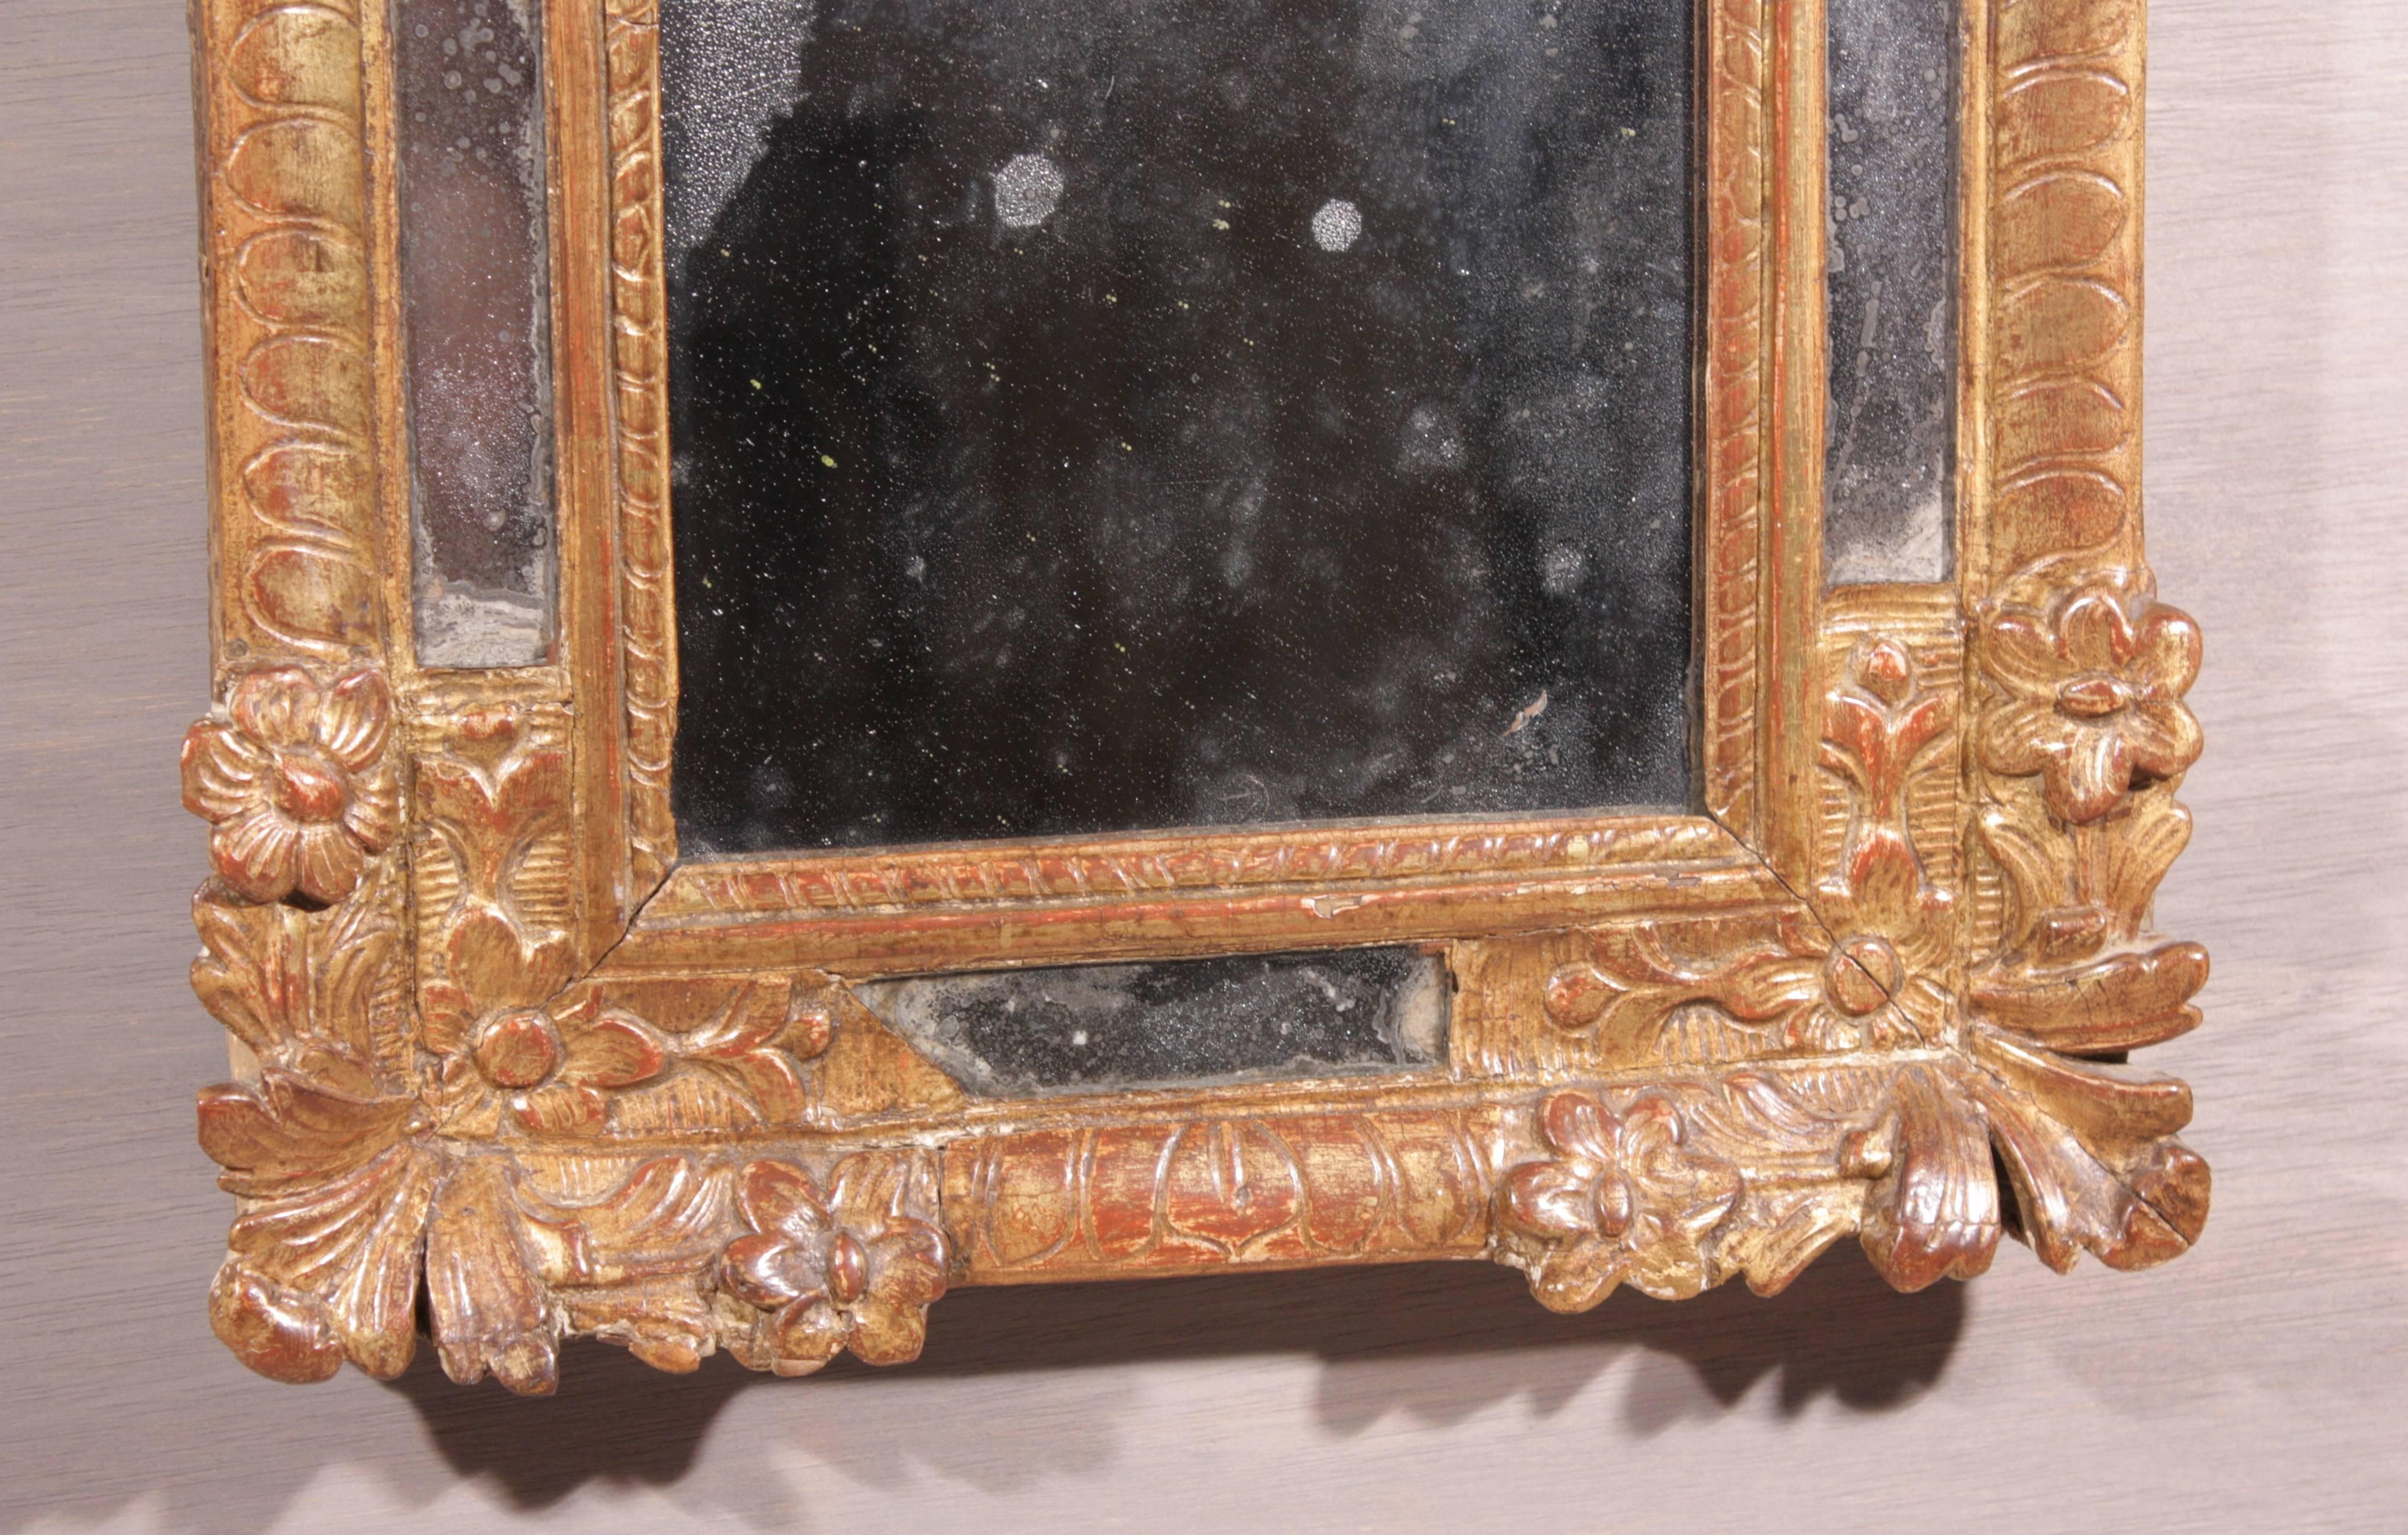 A petite French Regence period giltwood mirror, circa 1740, with original mercury glass plate.